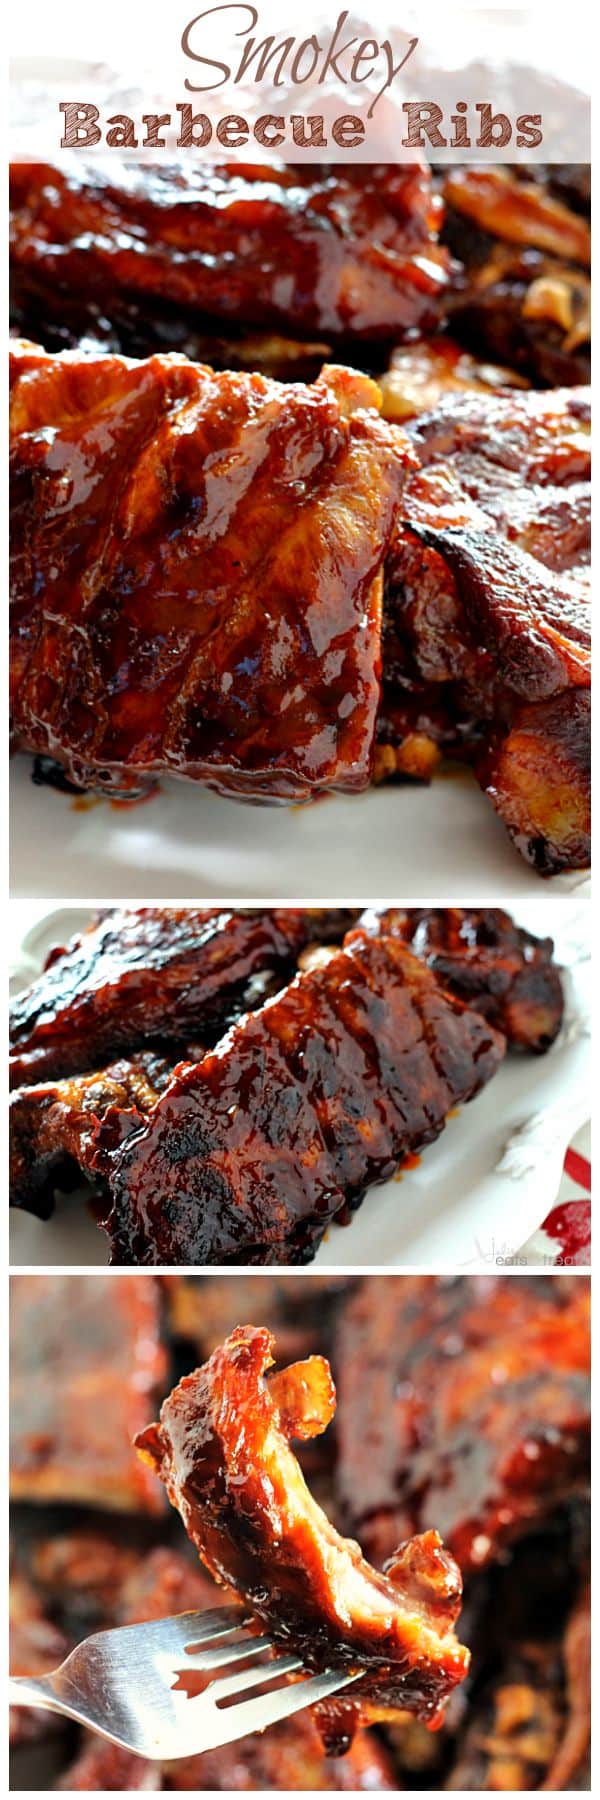 smokey barbecue ribs